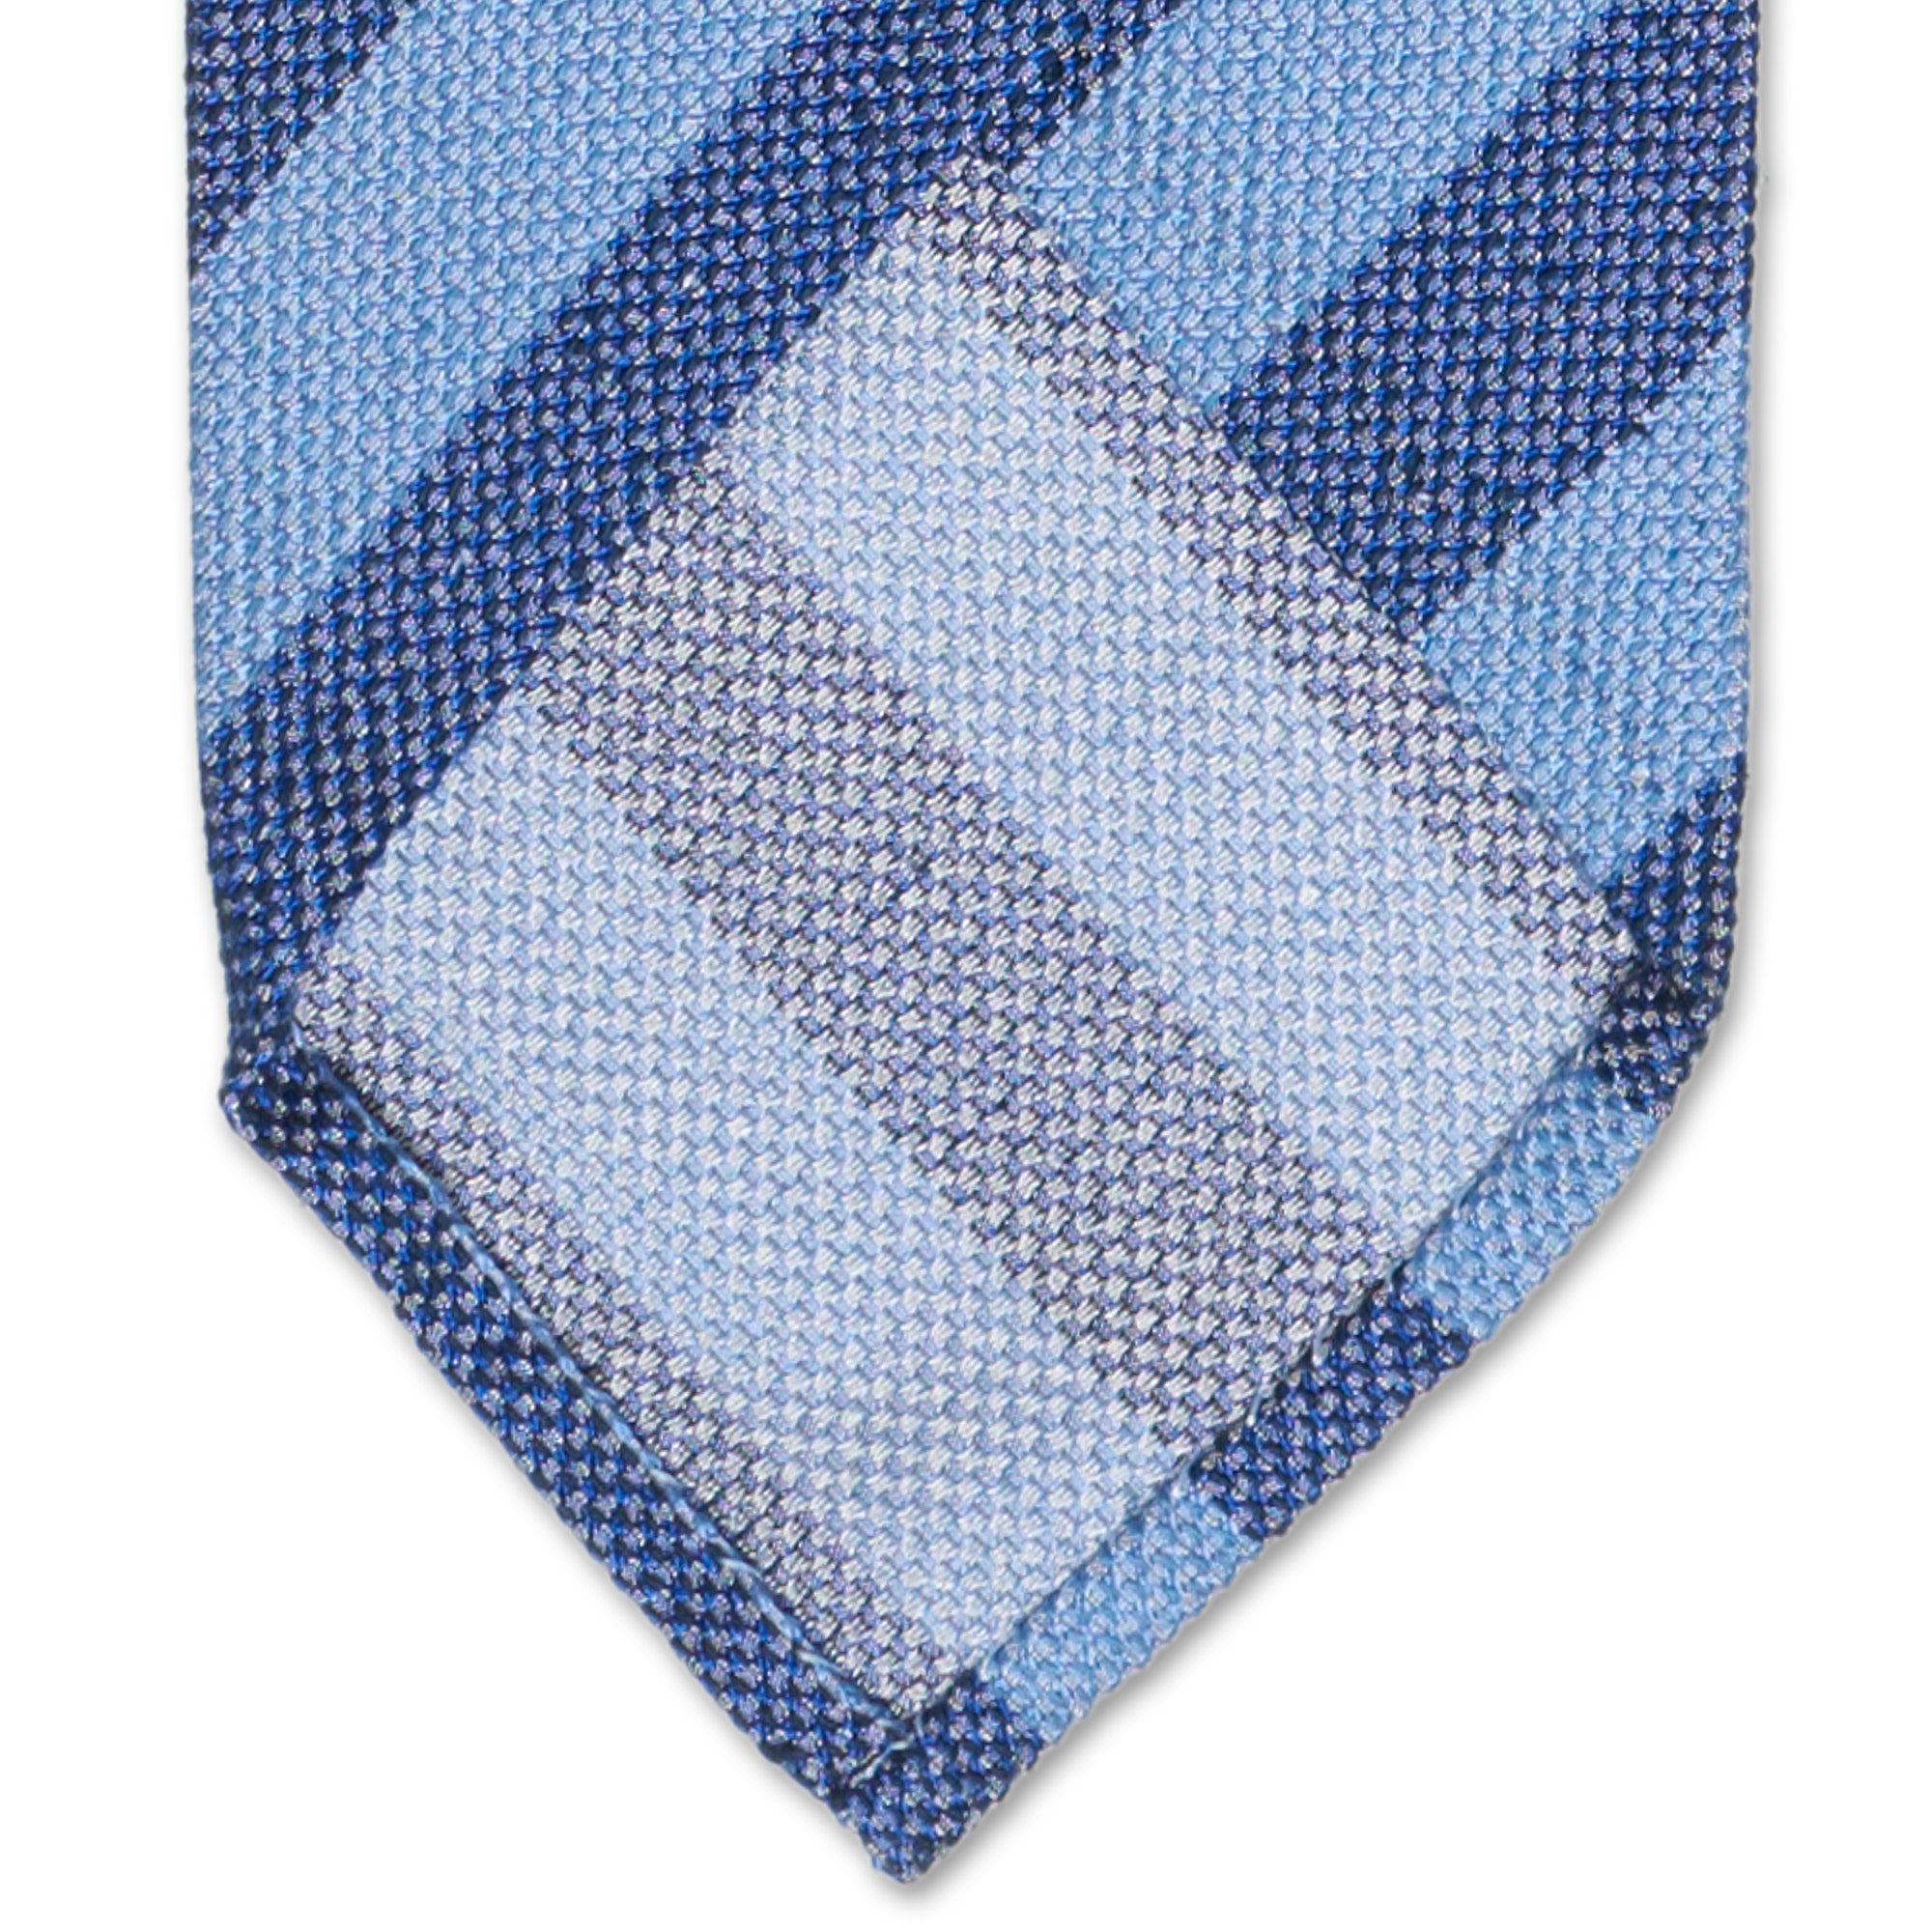 GIUSTO Bespoke Handmade Blue Awning Striped Silk Unlined Tie